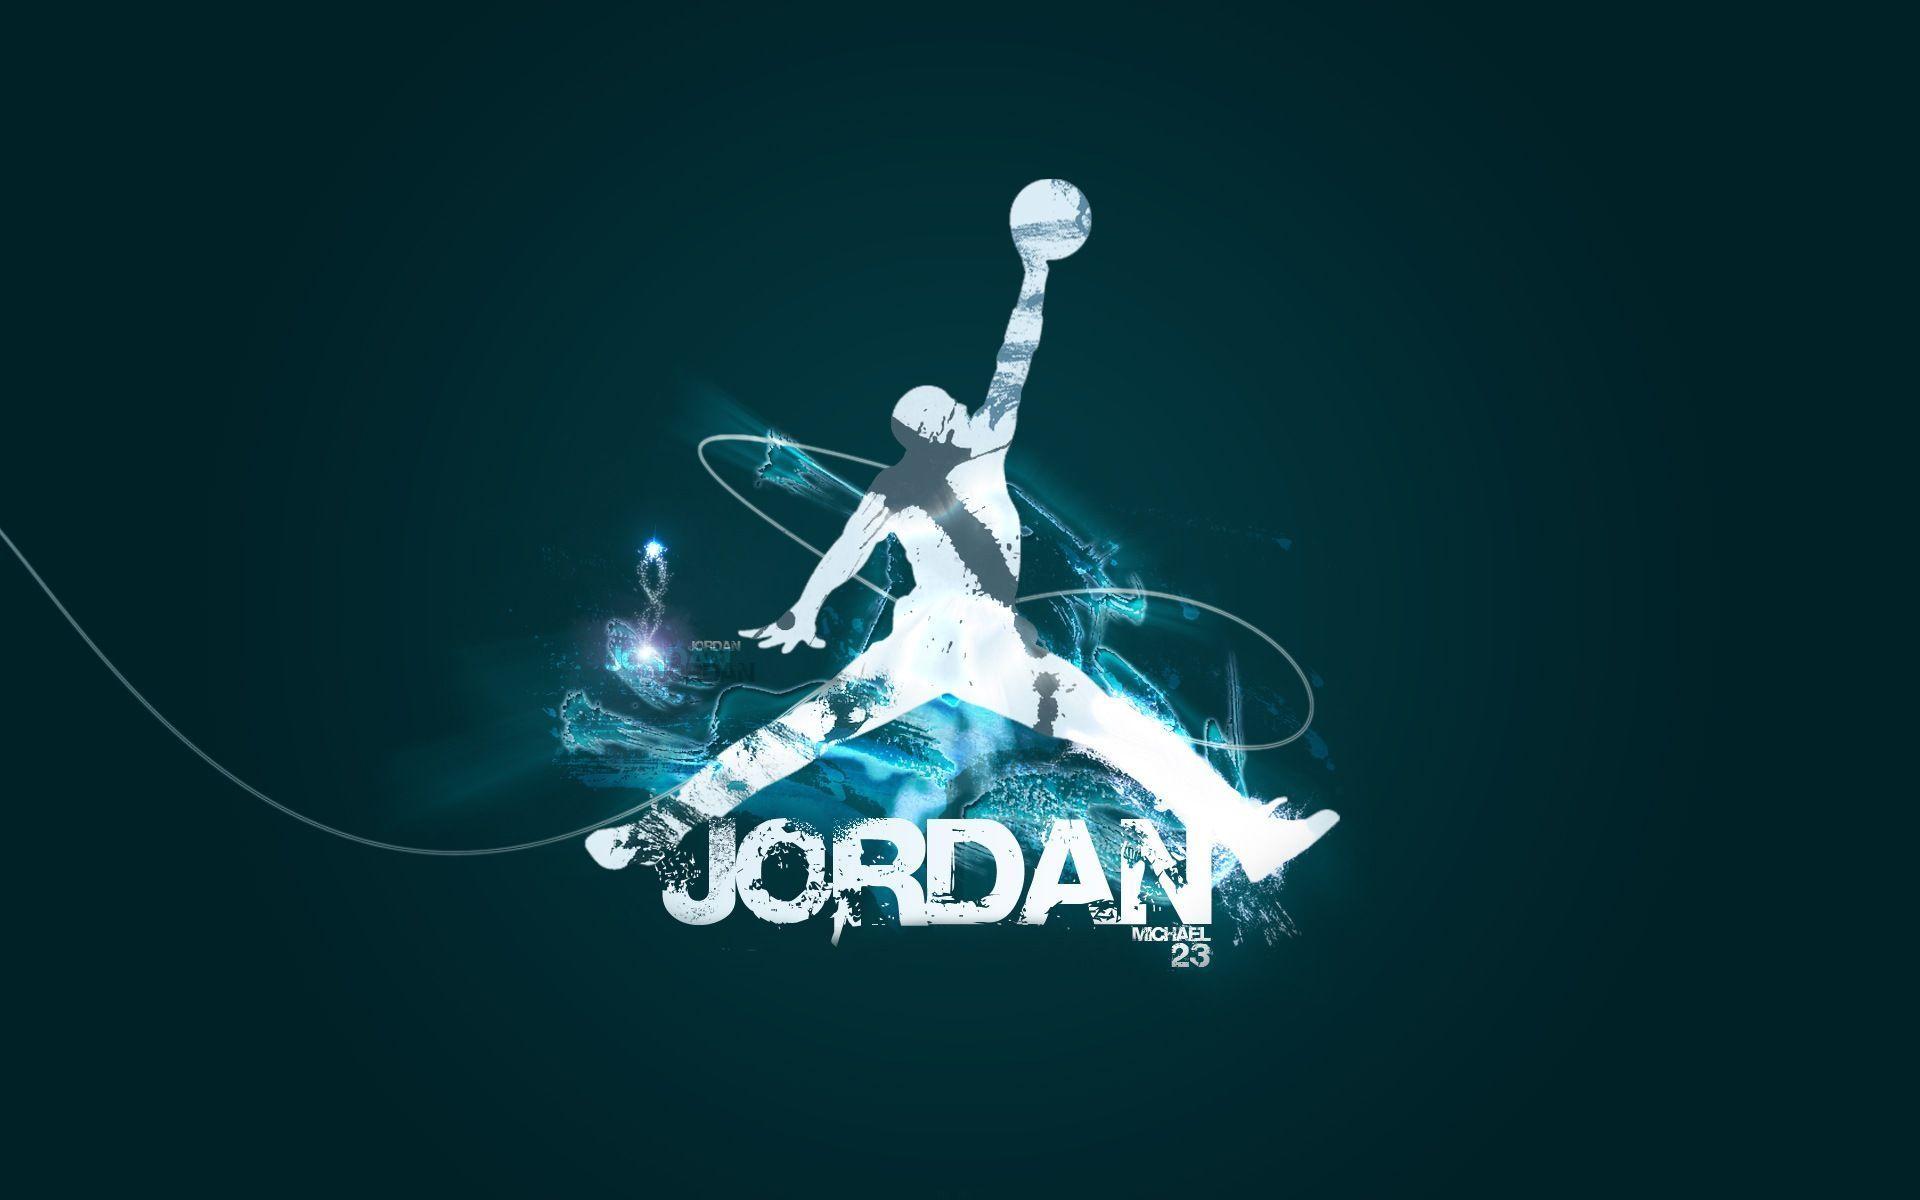 The Coolest Jordan Logo - Nike Air Jordan Wallpaper and Iconic Image for Desktops